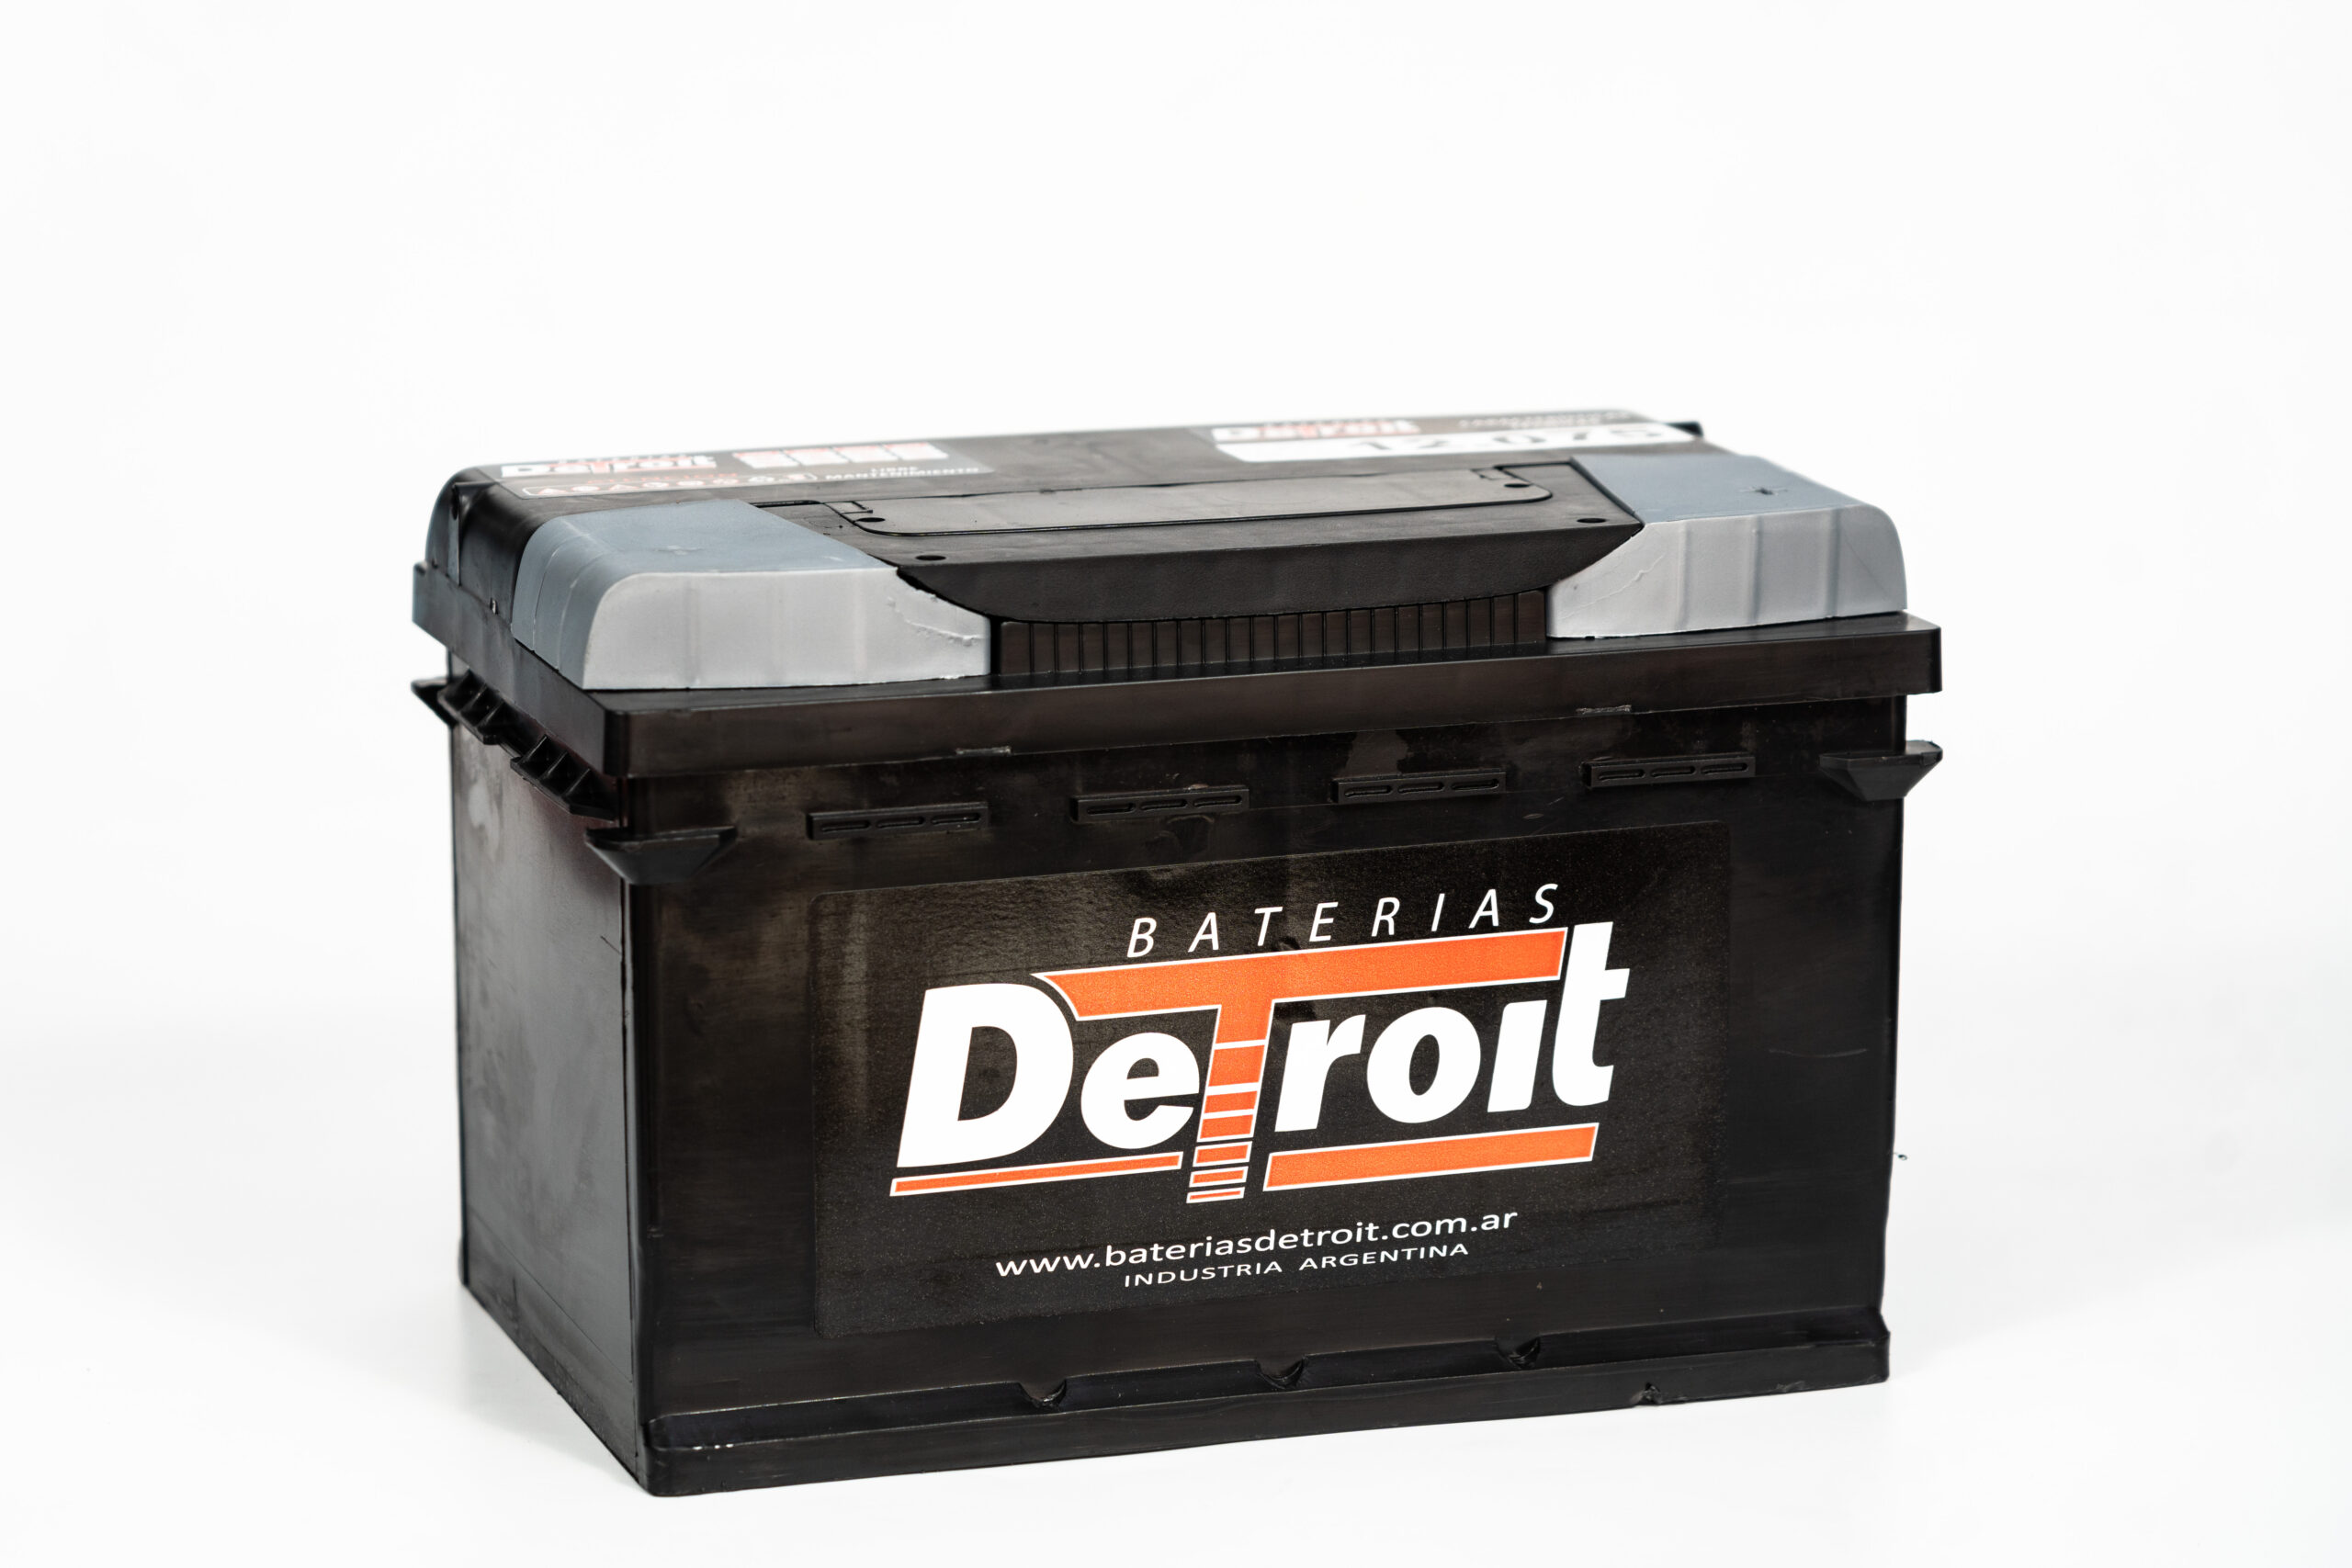 Batería DETROIT START STOP 12V80AH – Baterías Detroit